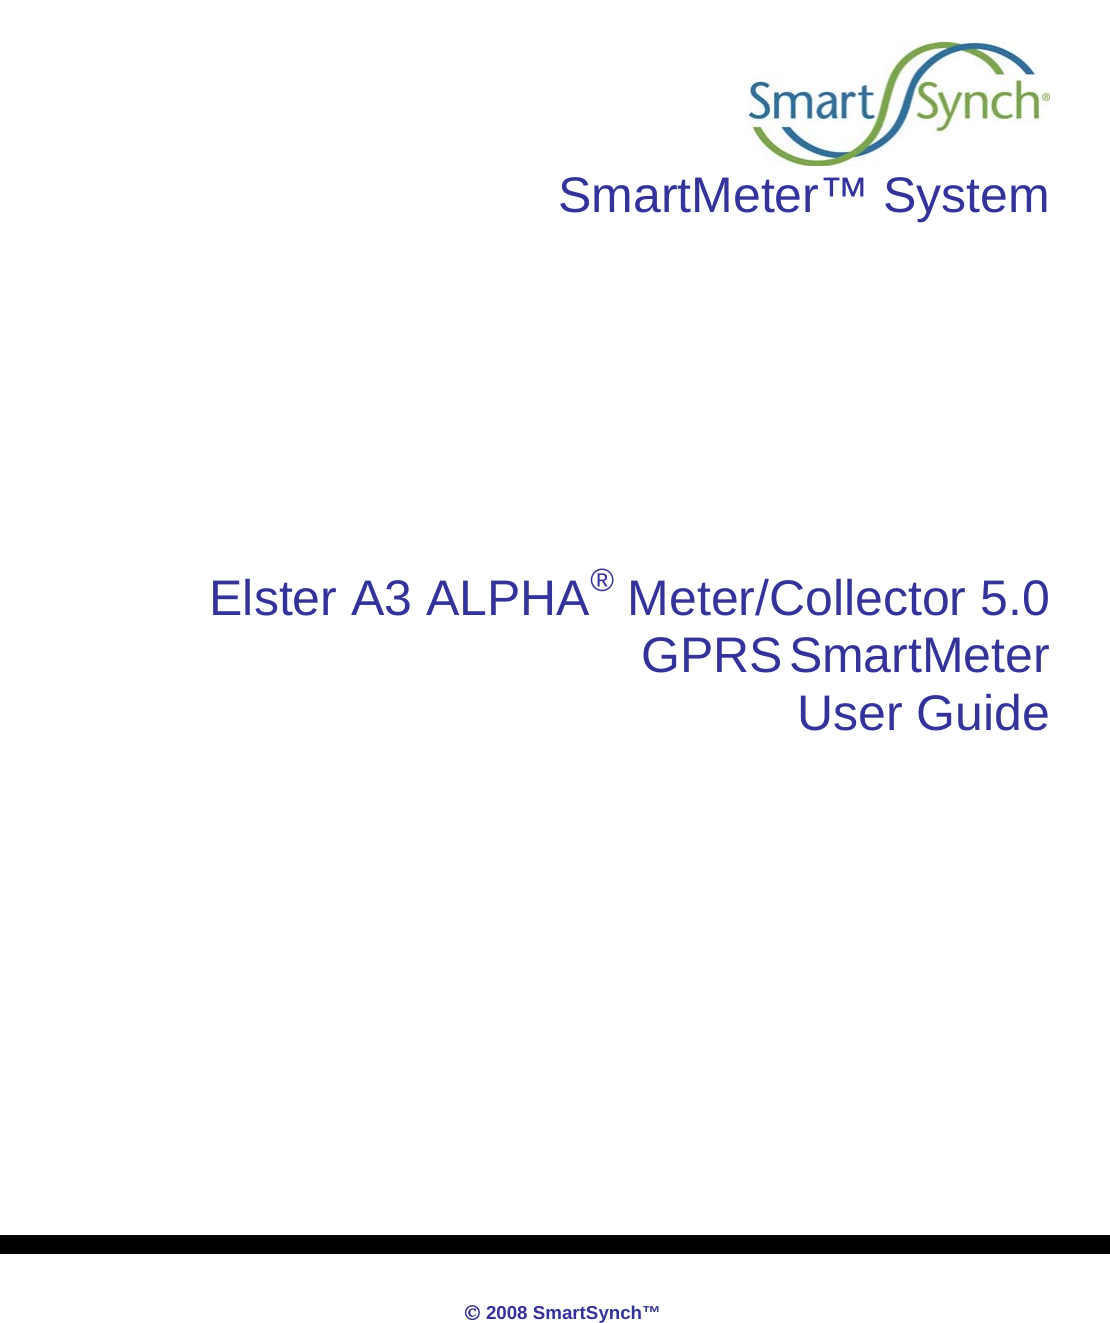            © 2008 SmartSynch™     SmartMeter™ System       Elster A3 ALPHA® Meter/Collector 5.0 GPRS SmartMeter User Guide         